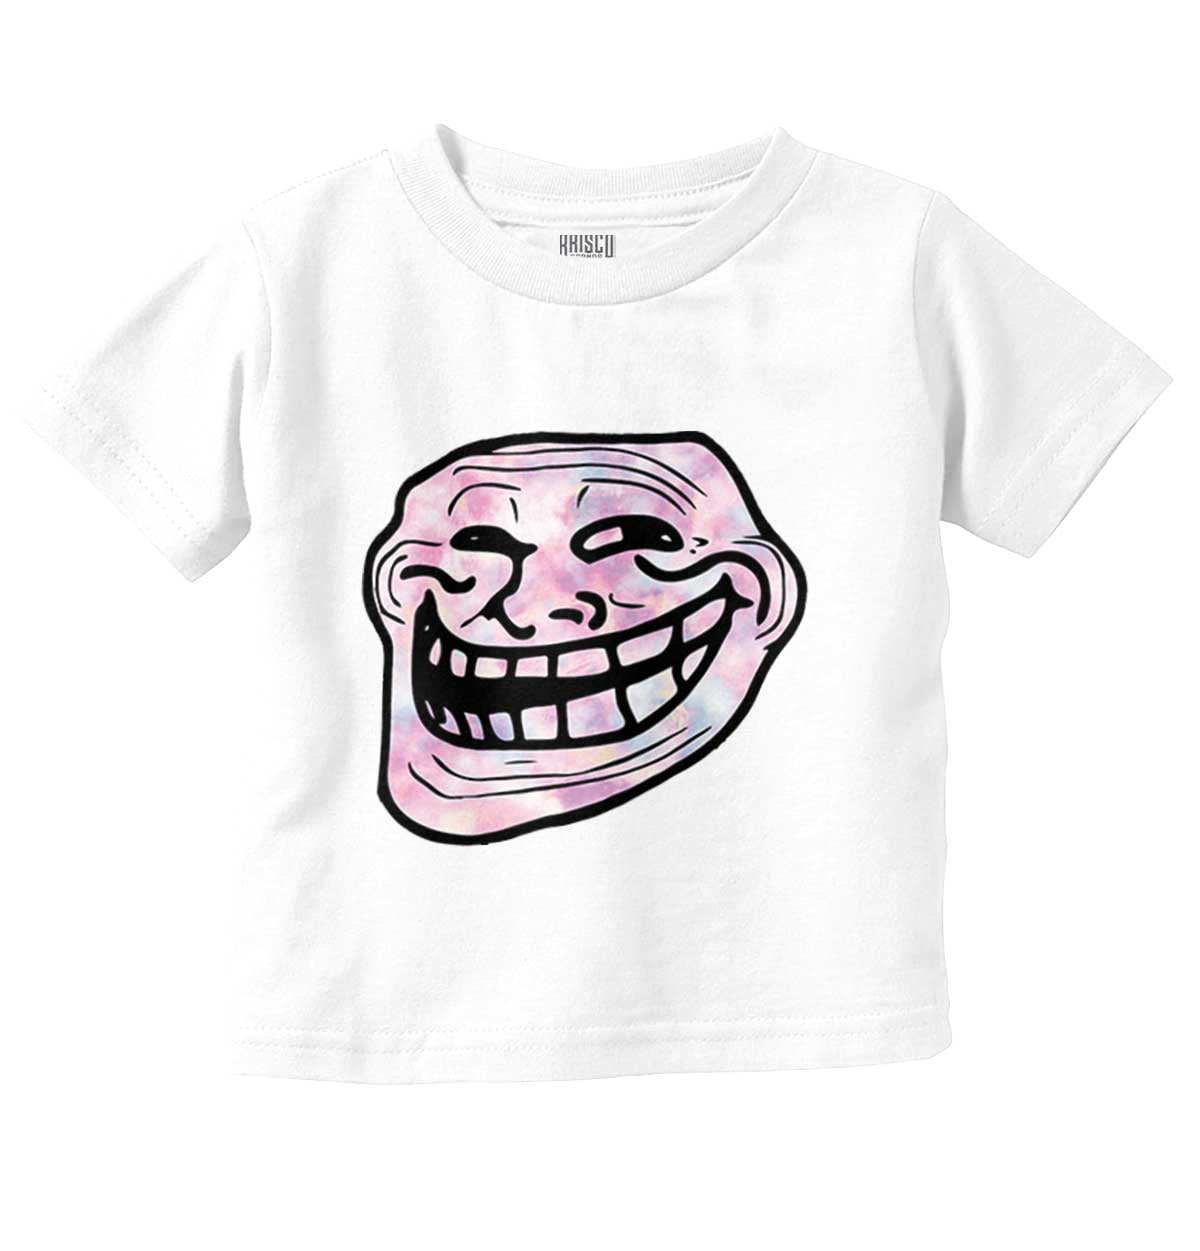  Troll Face Meme Problem Funny Mens Women Kids Boys Girls  T-Shirt : Clothing, Shoes & Jewelry